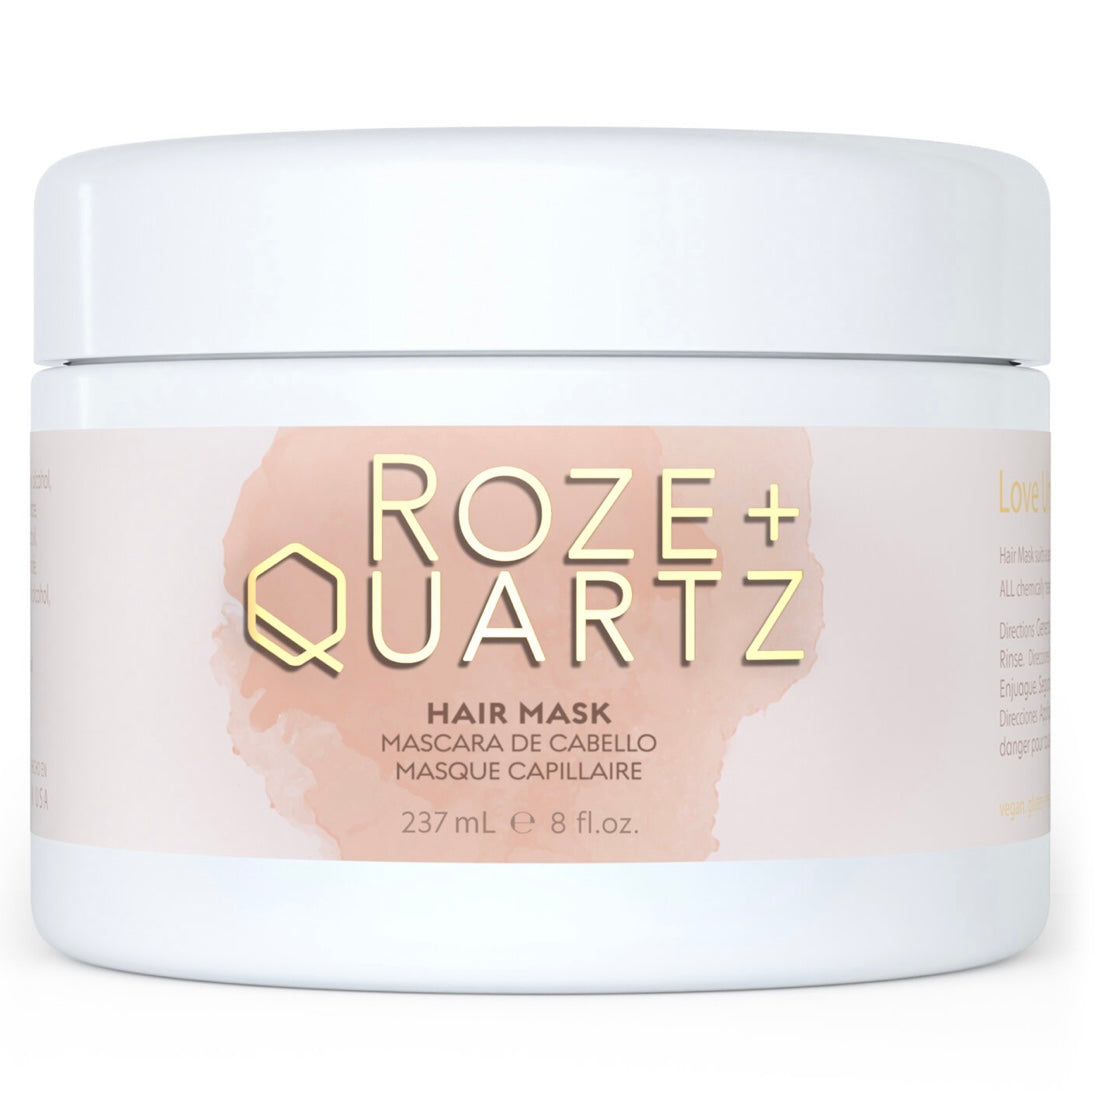 Roze + Quartz Hair Mask for Dry, Color Treated, Damaged Hair